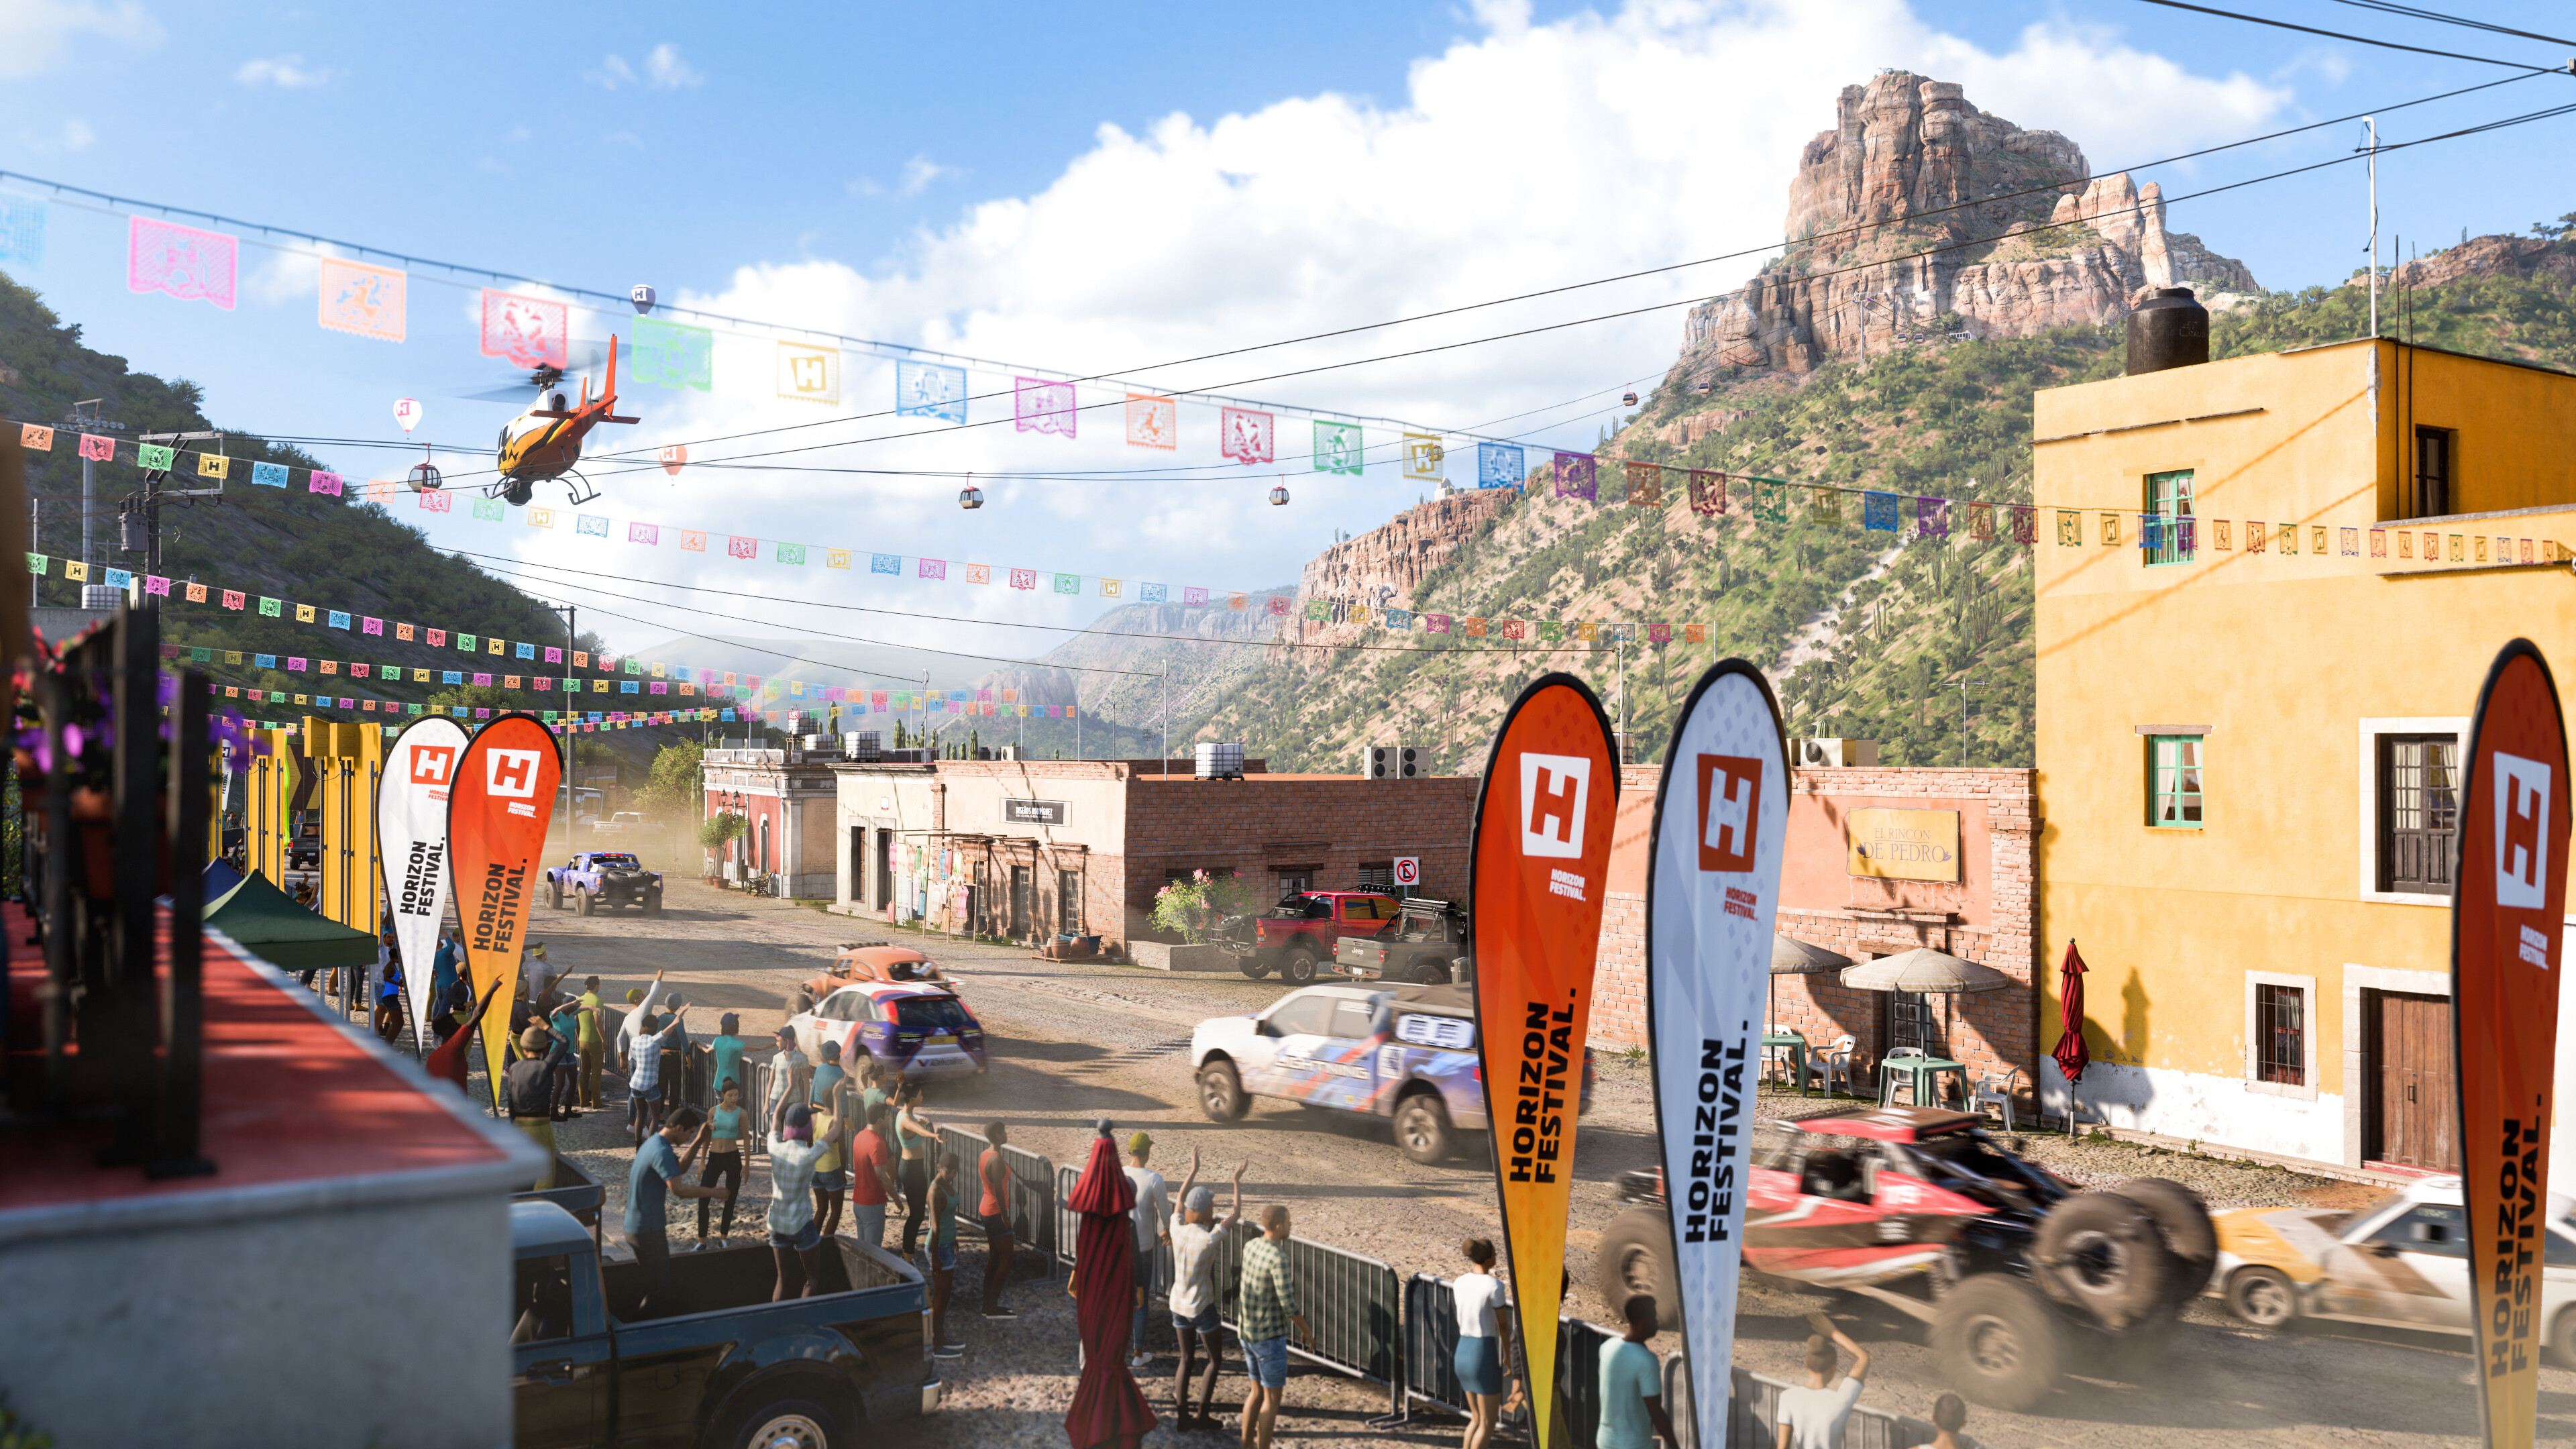 Das Forza Horizon 5-DLC Rallye-Abenteuer ist ab sofort verfügbar